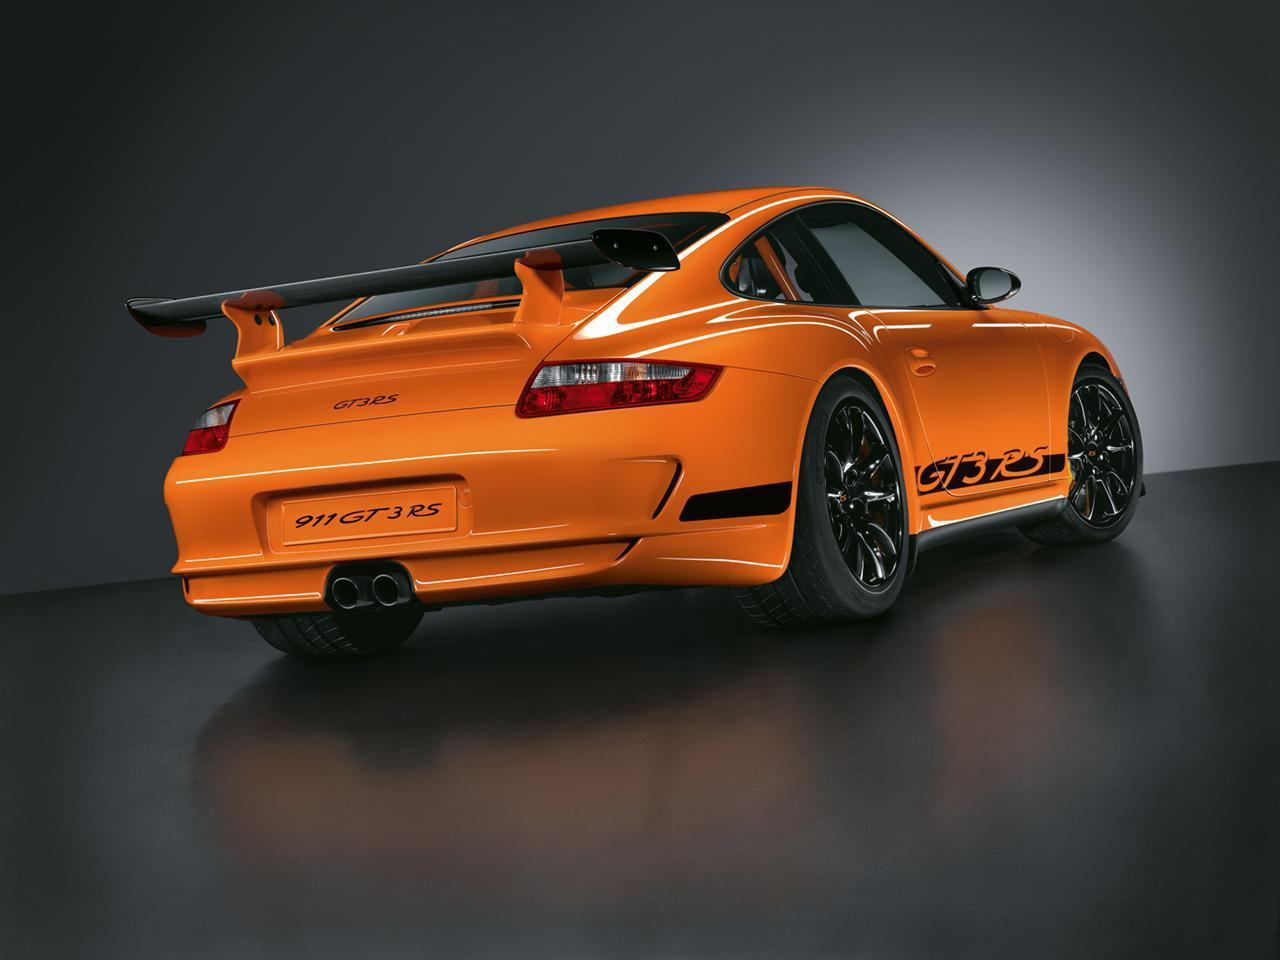 Porsche GT RS Desk 4K Wallpapers and High Resolution